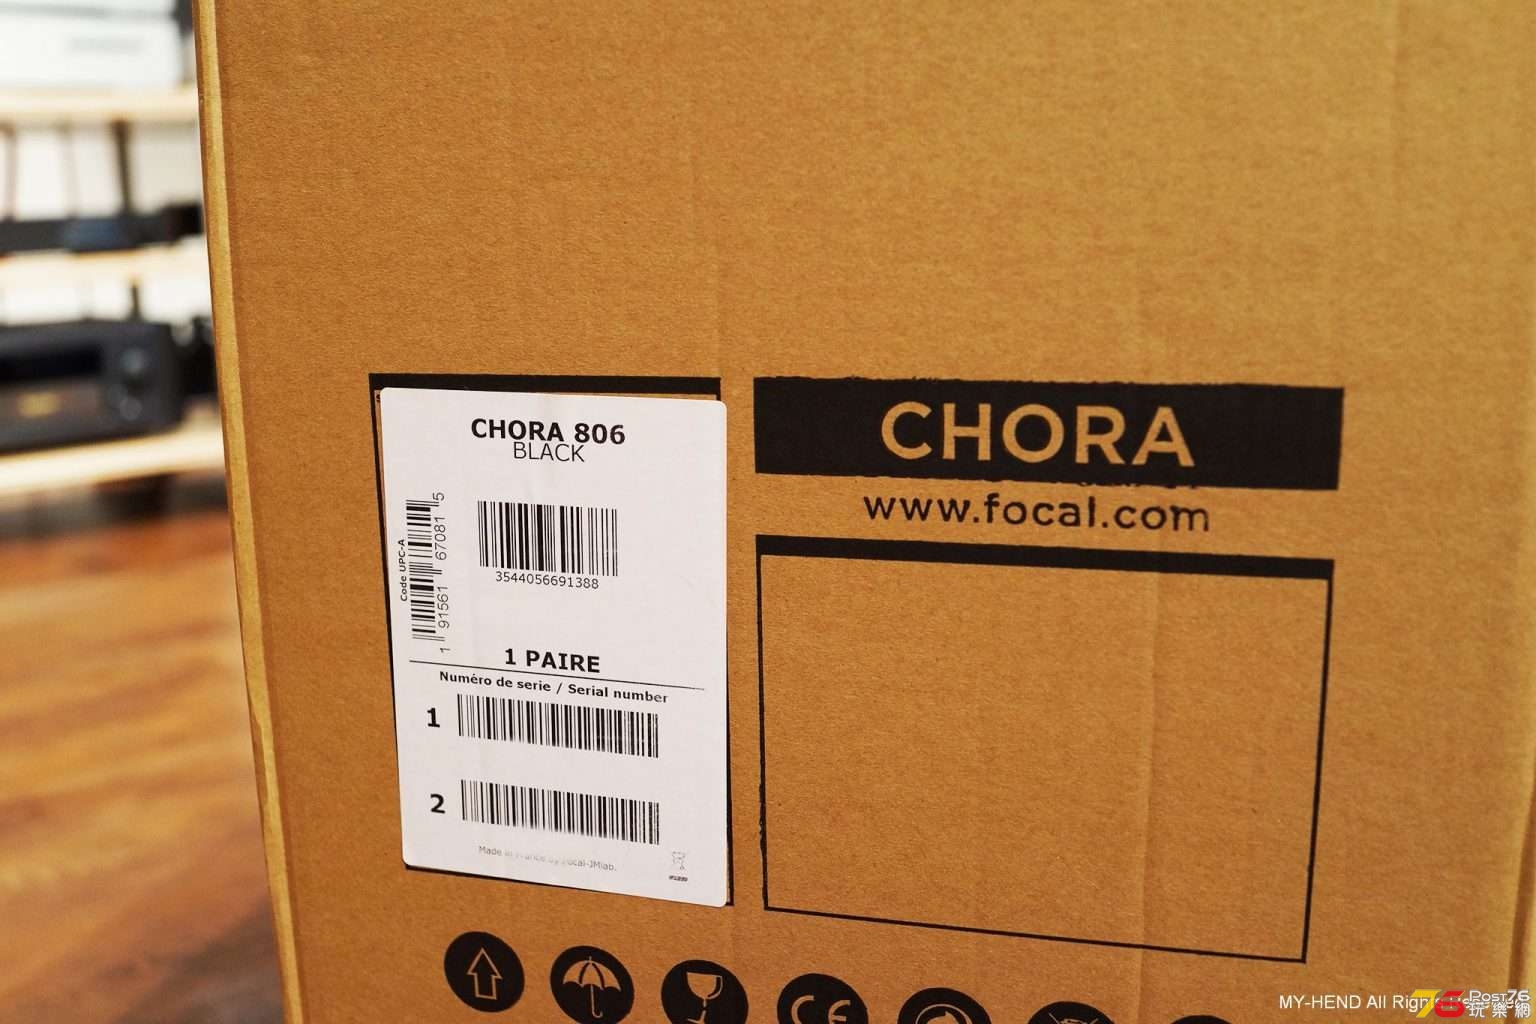 Focal-Chora002-1536x1024.jpg